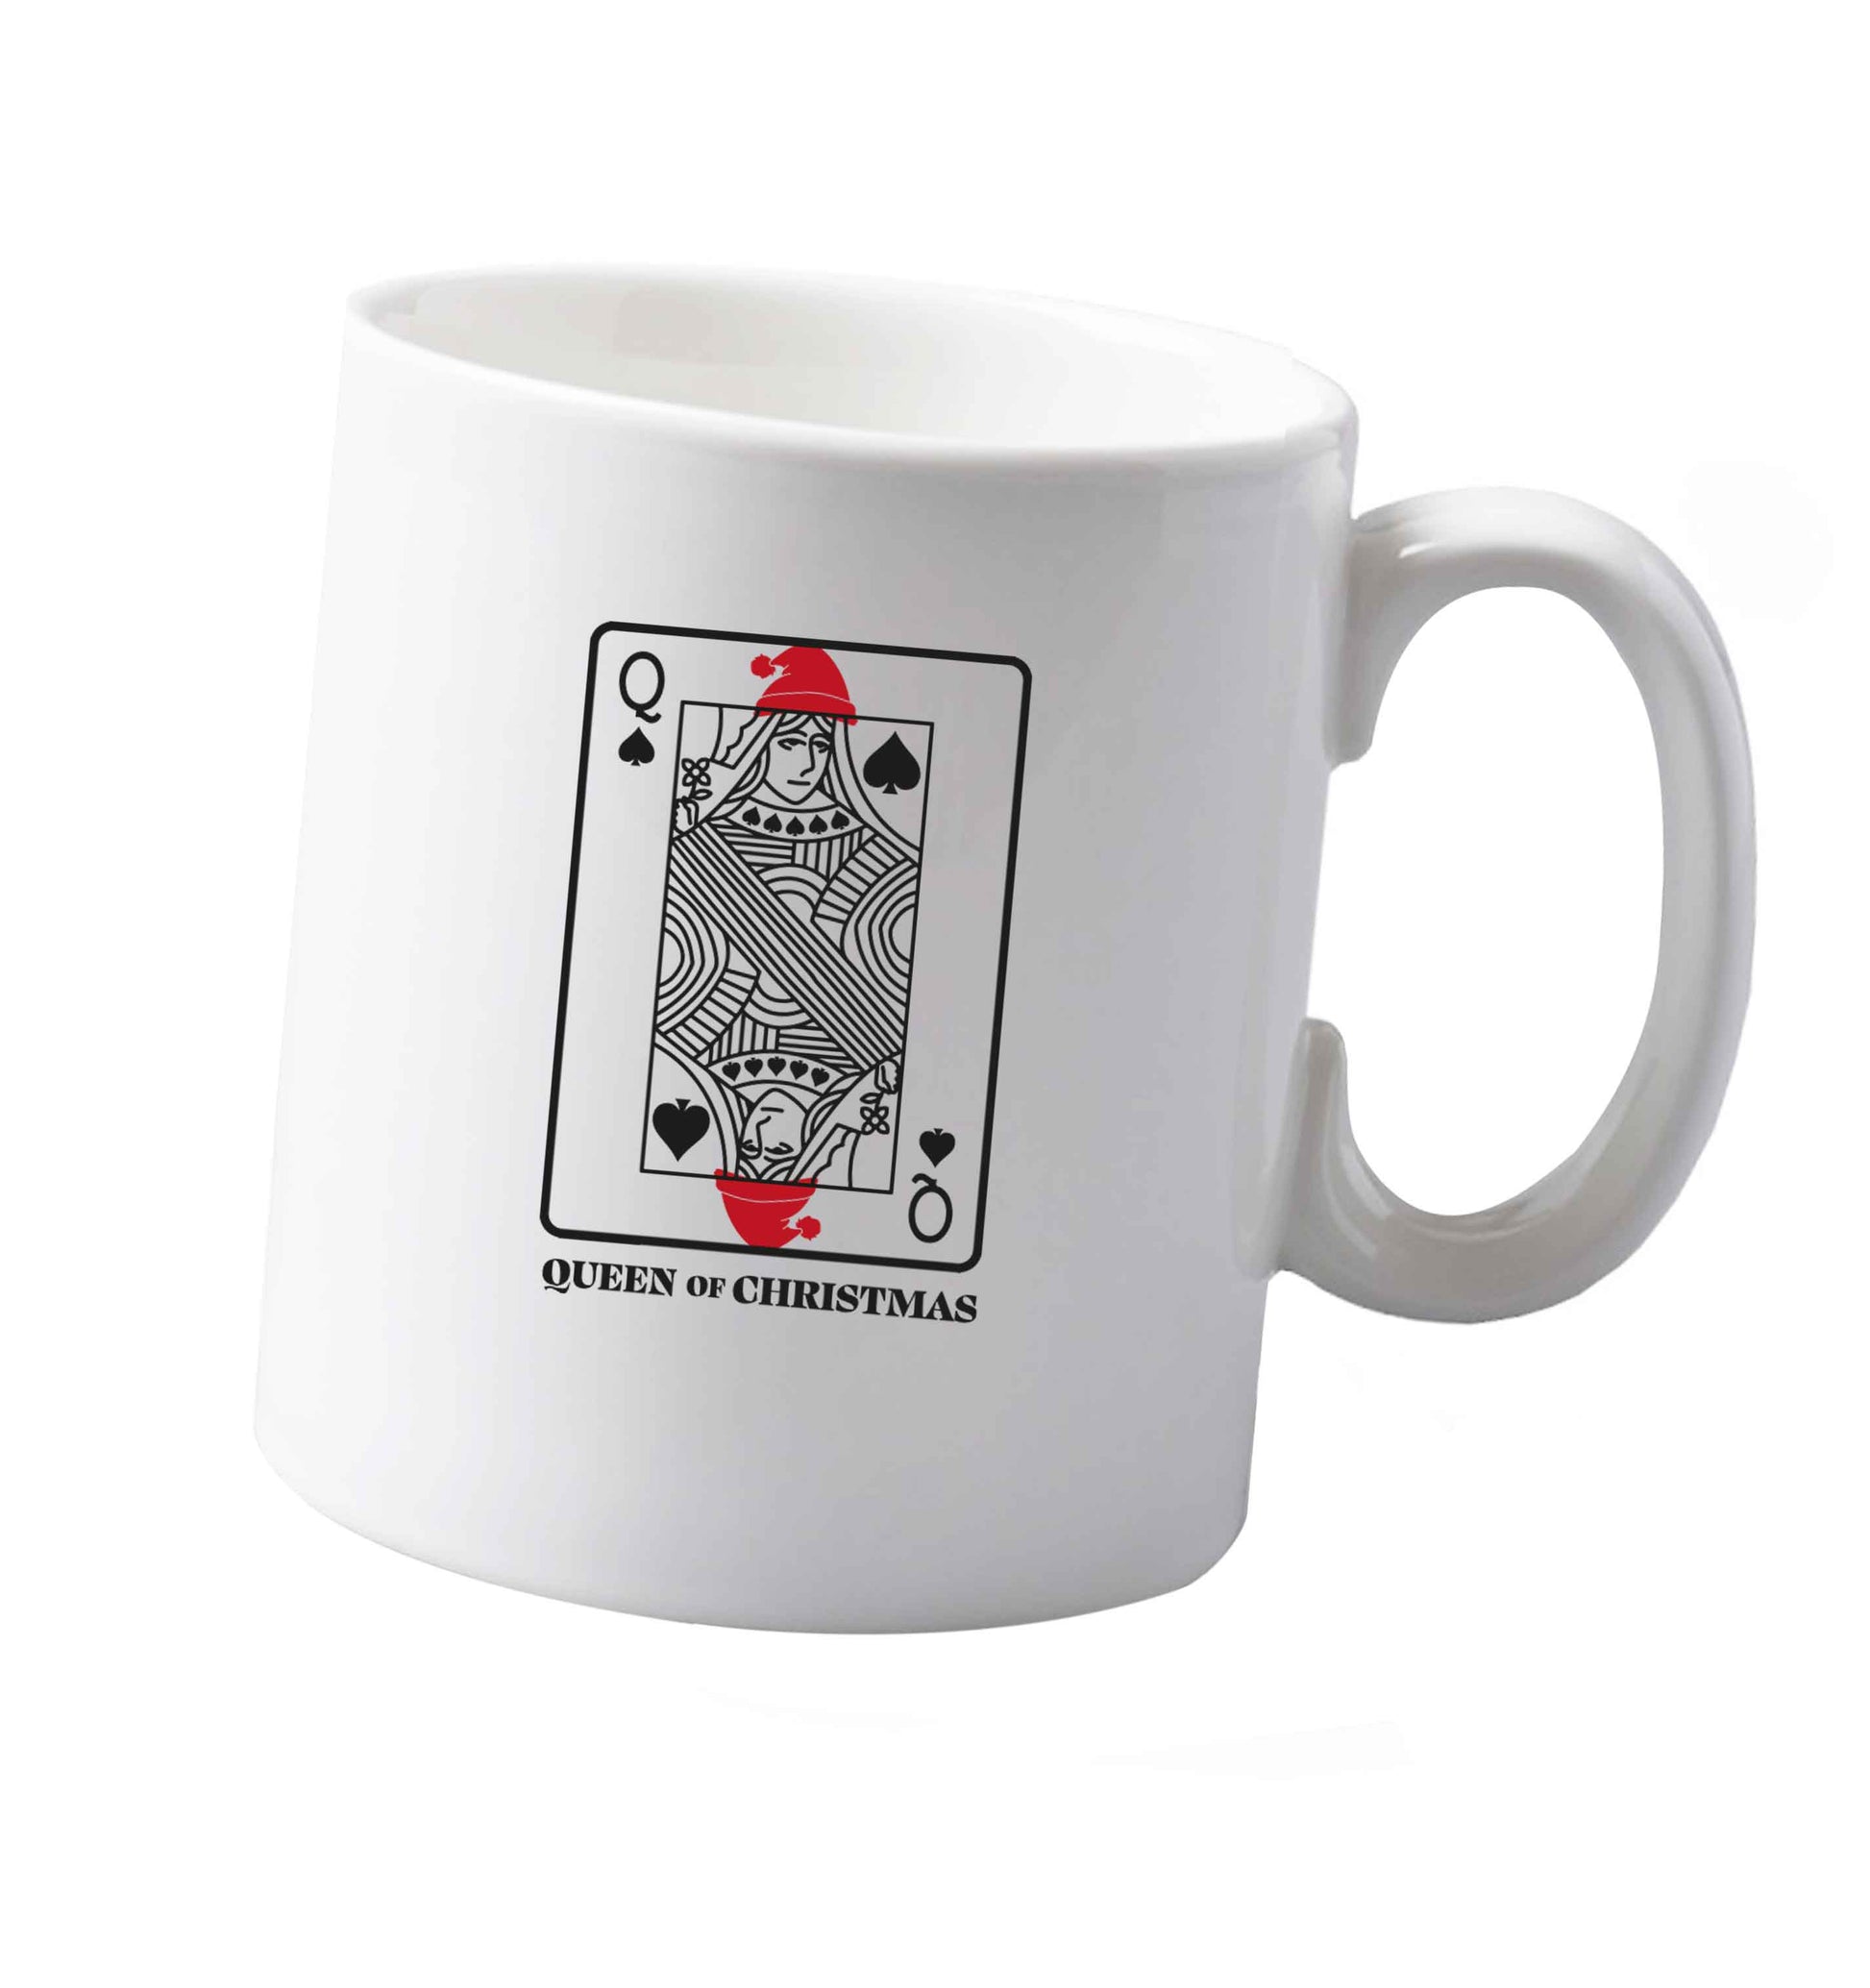 10 oz Queen of christmas ceramic mug both sides